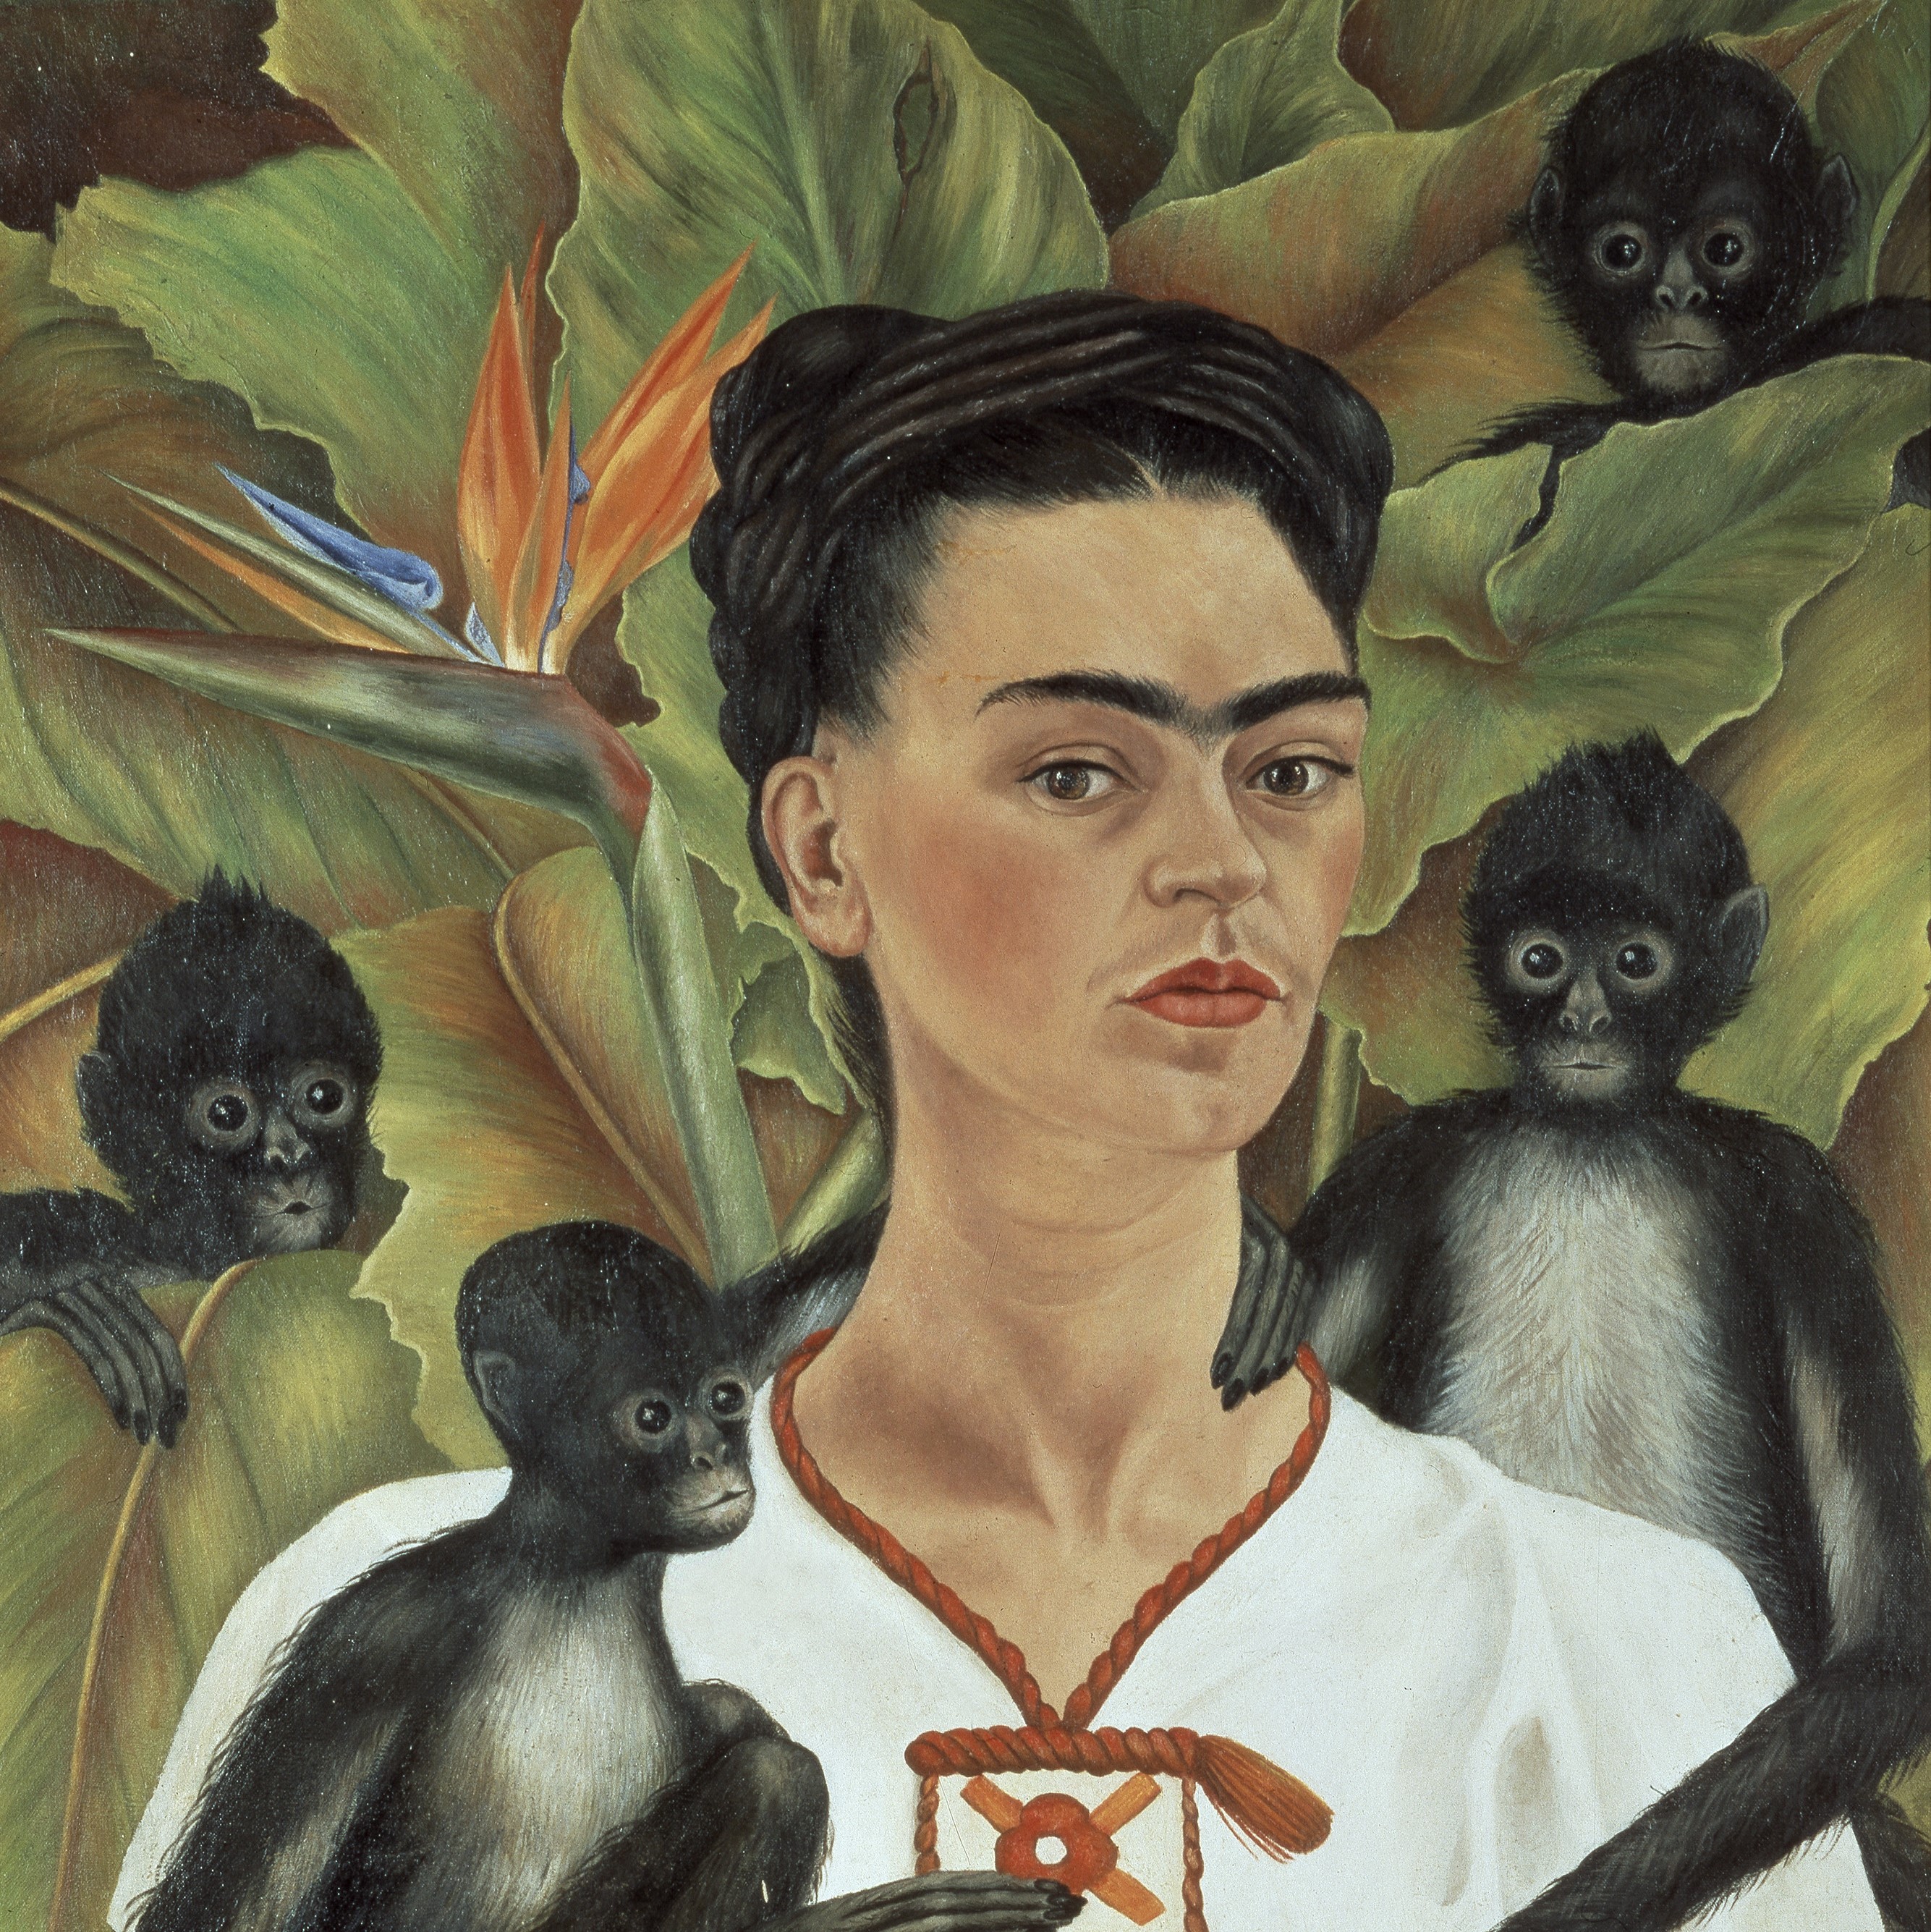 Kahlo & Rivera: Mexican Modernism - A Curator’s Talk